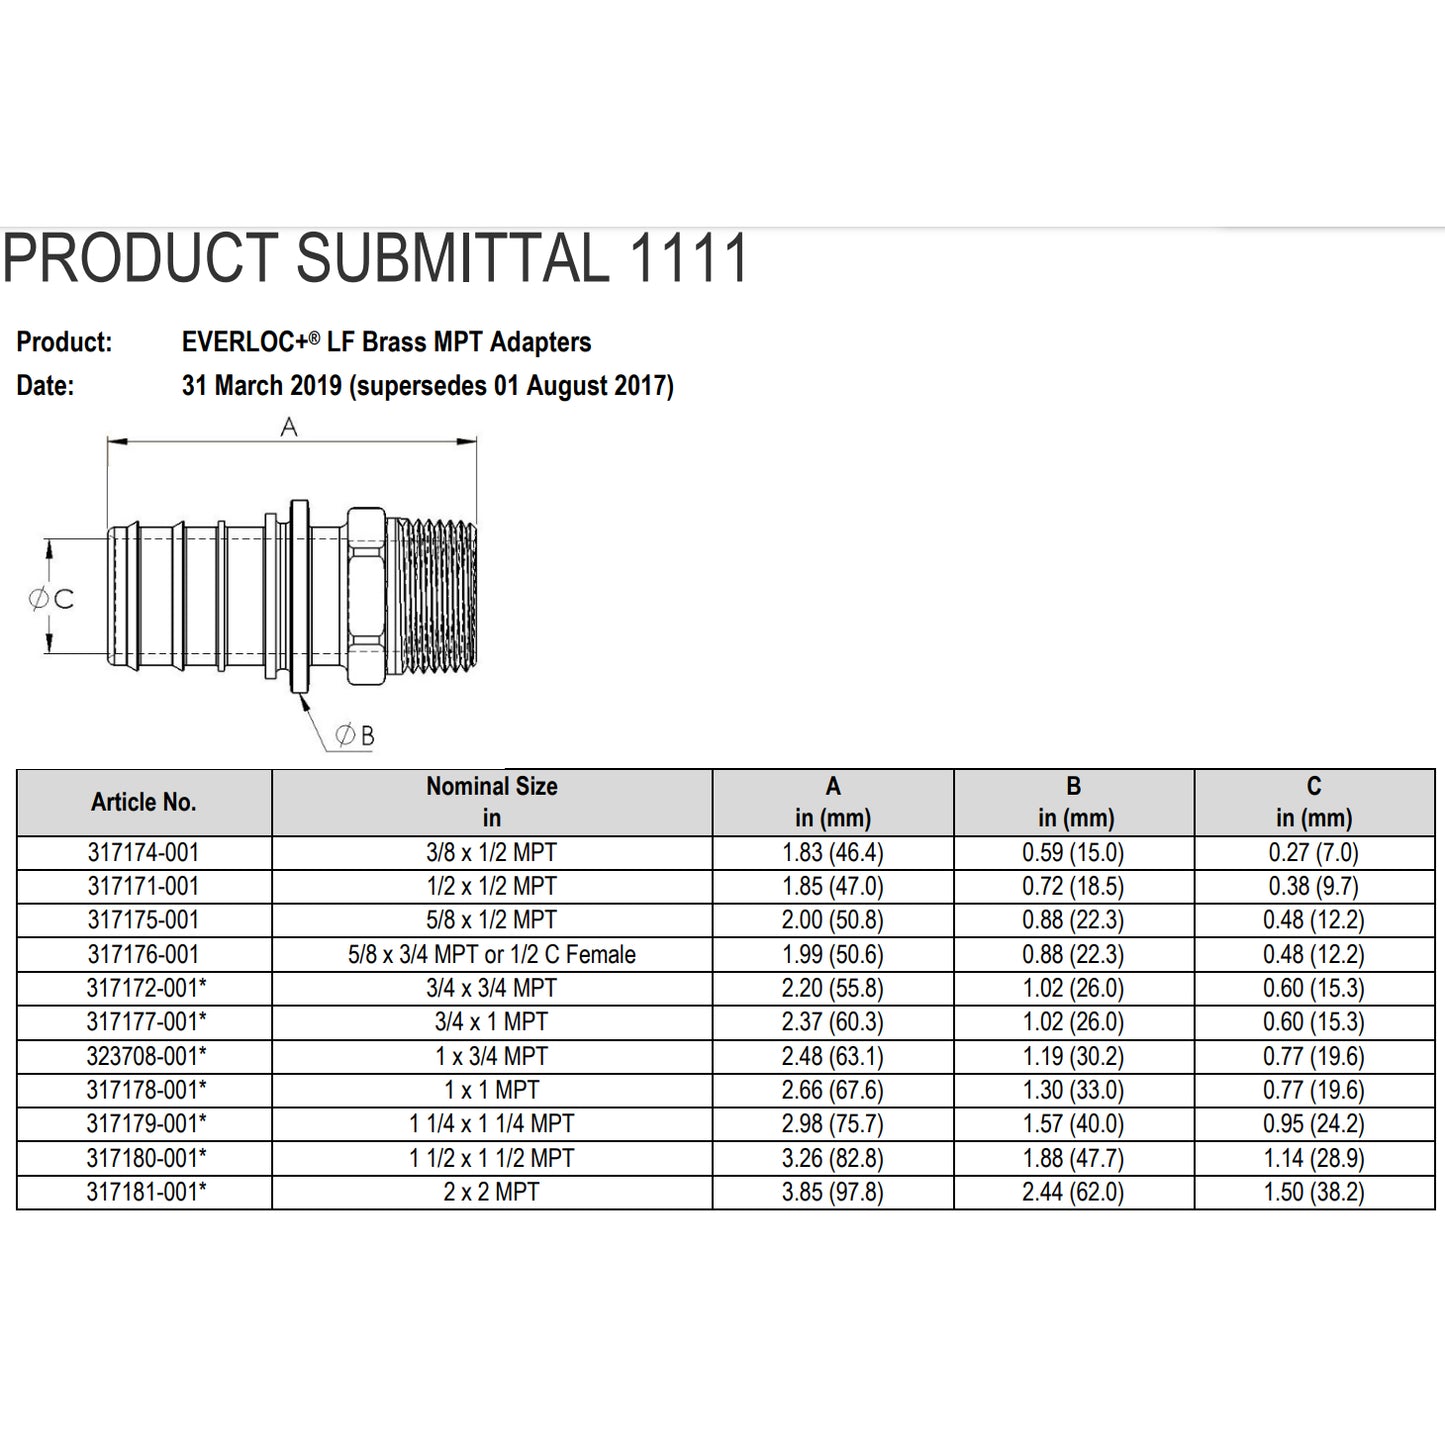 323708-001 - 1" x 3/4" MPT EVERLOC+ LF Brass Adapter